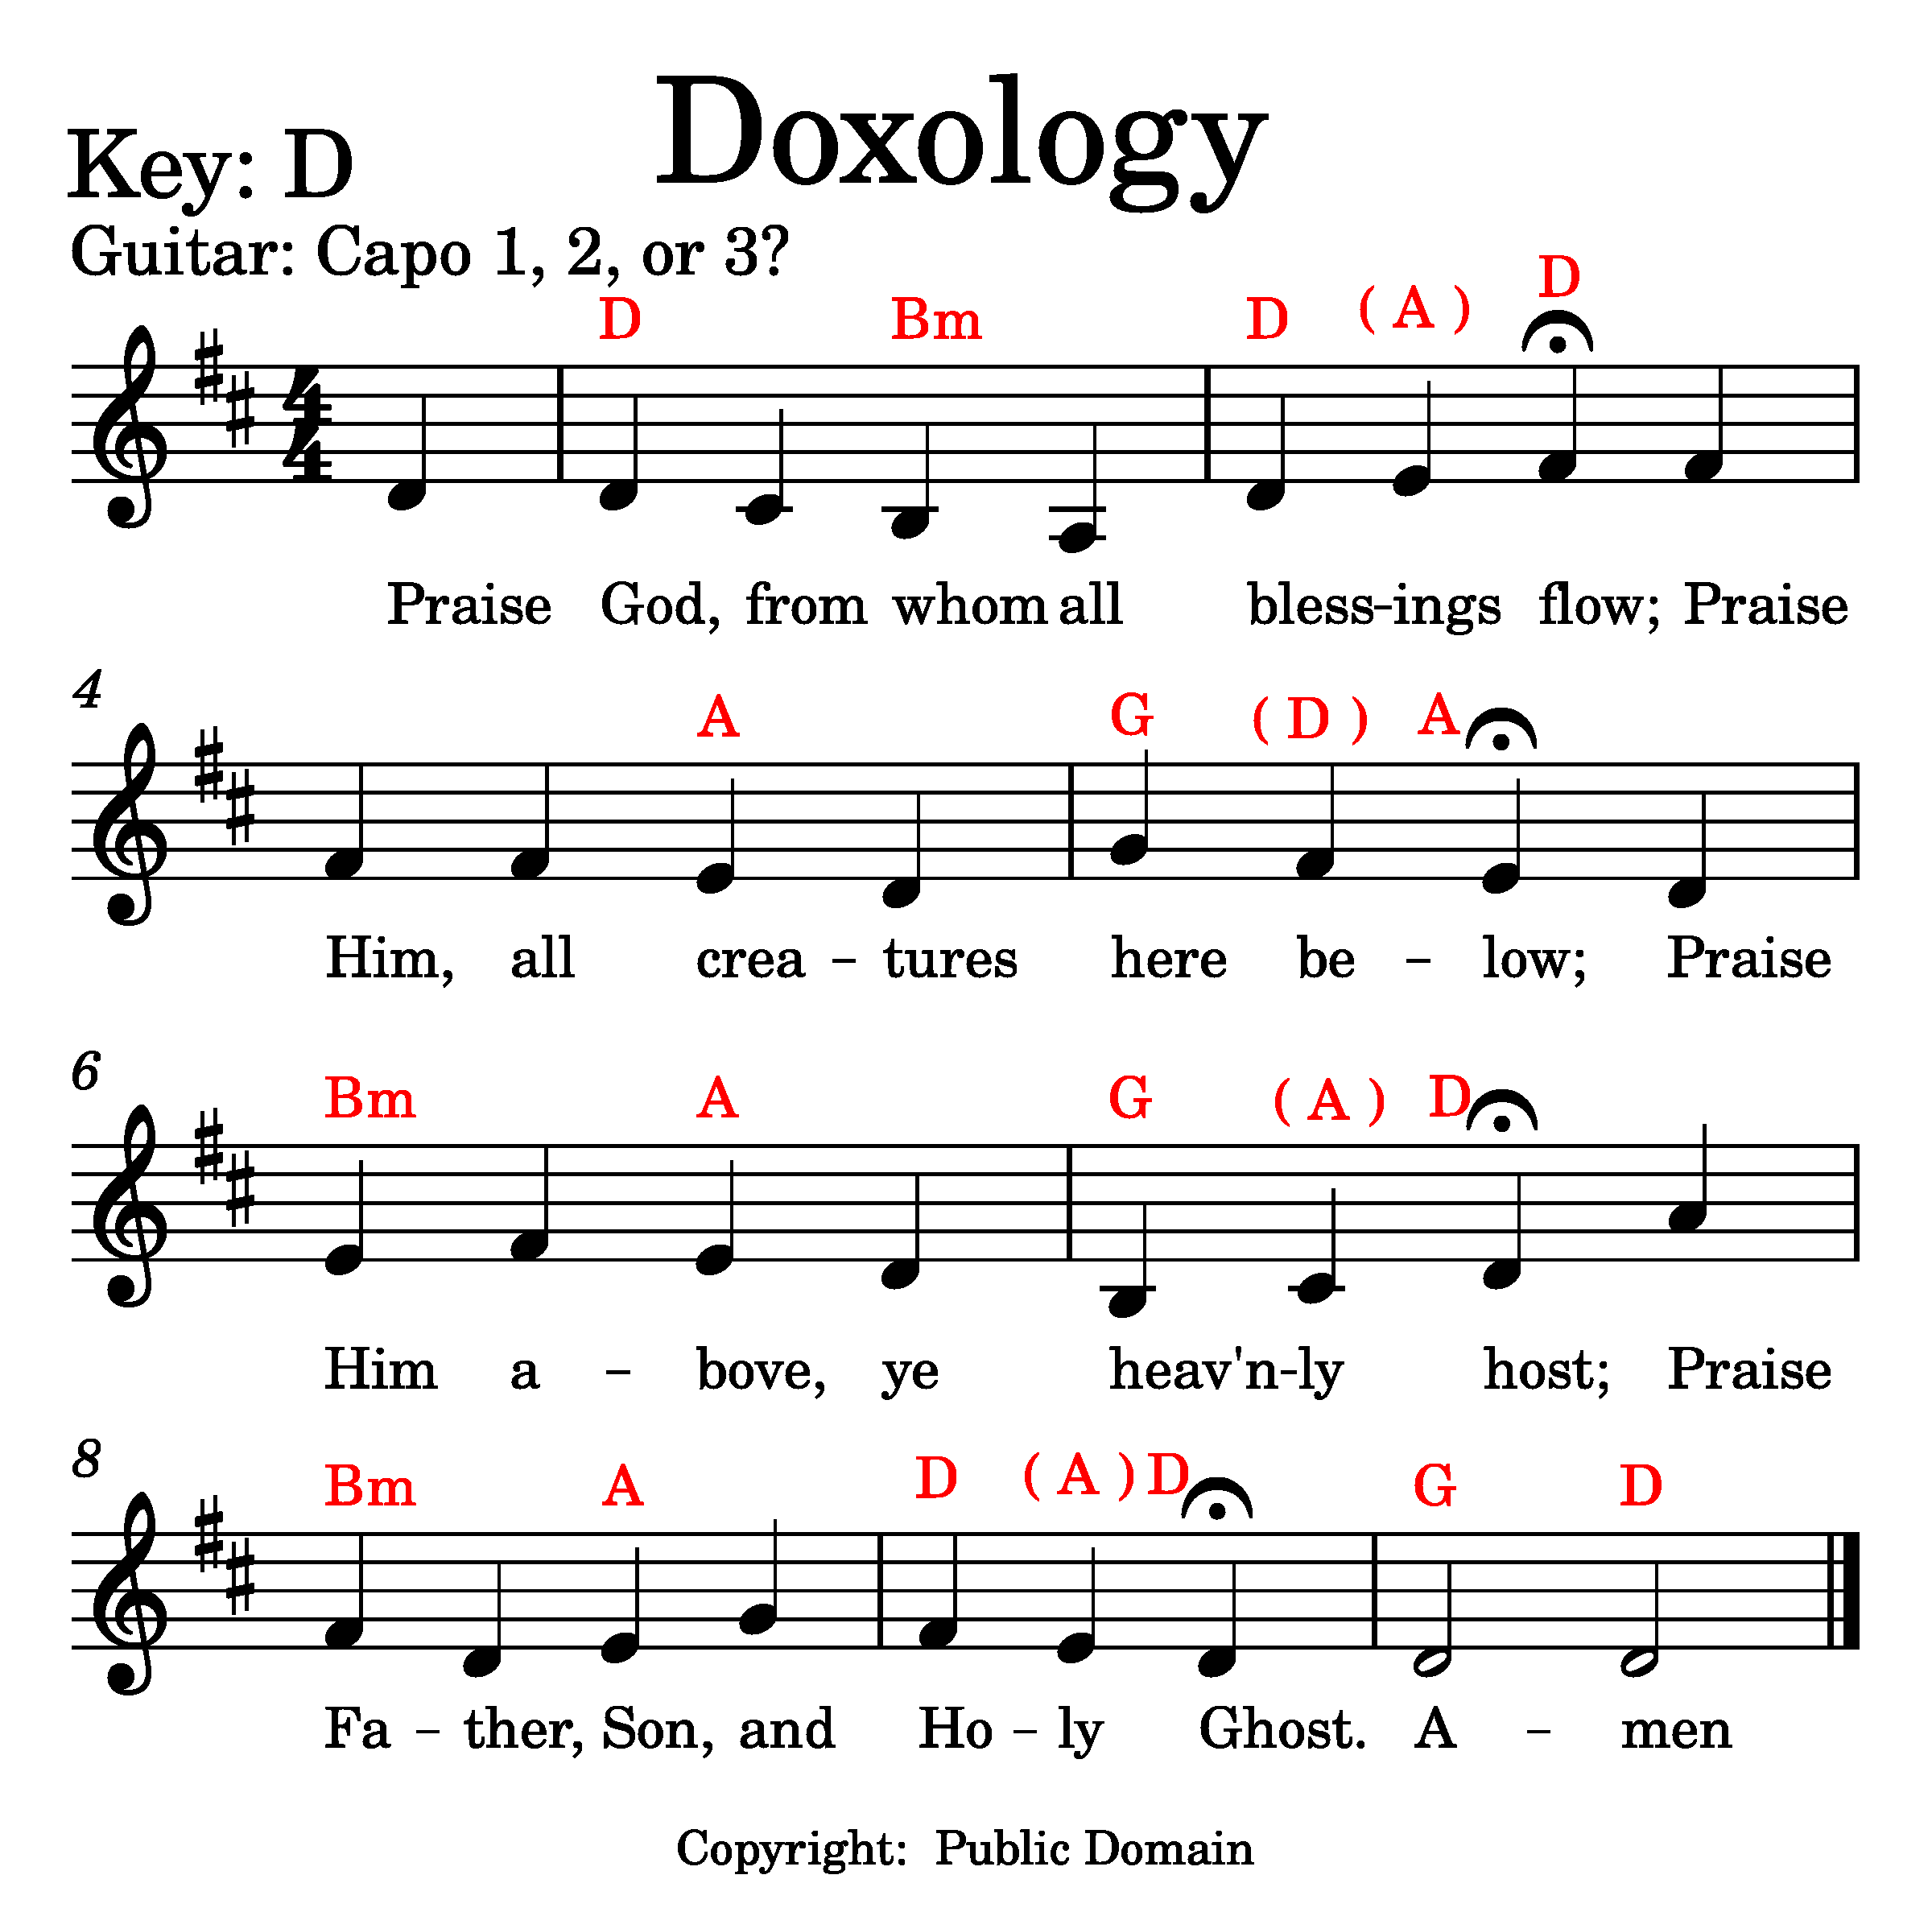 Doxology music and lyrics.